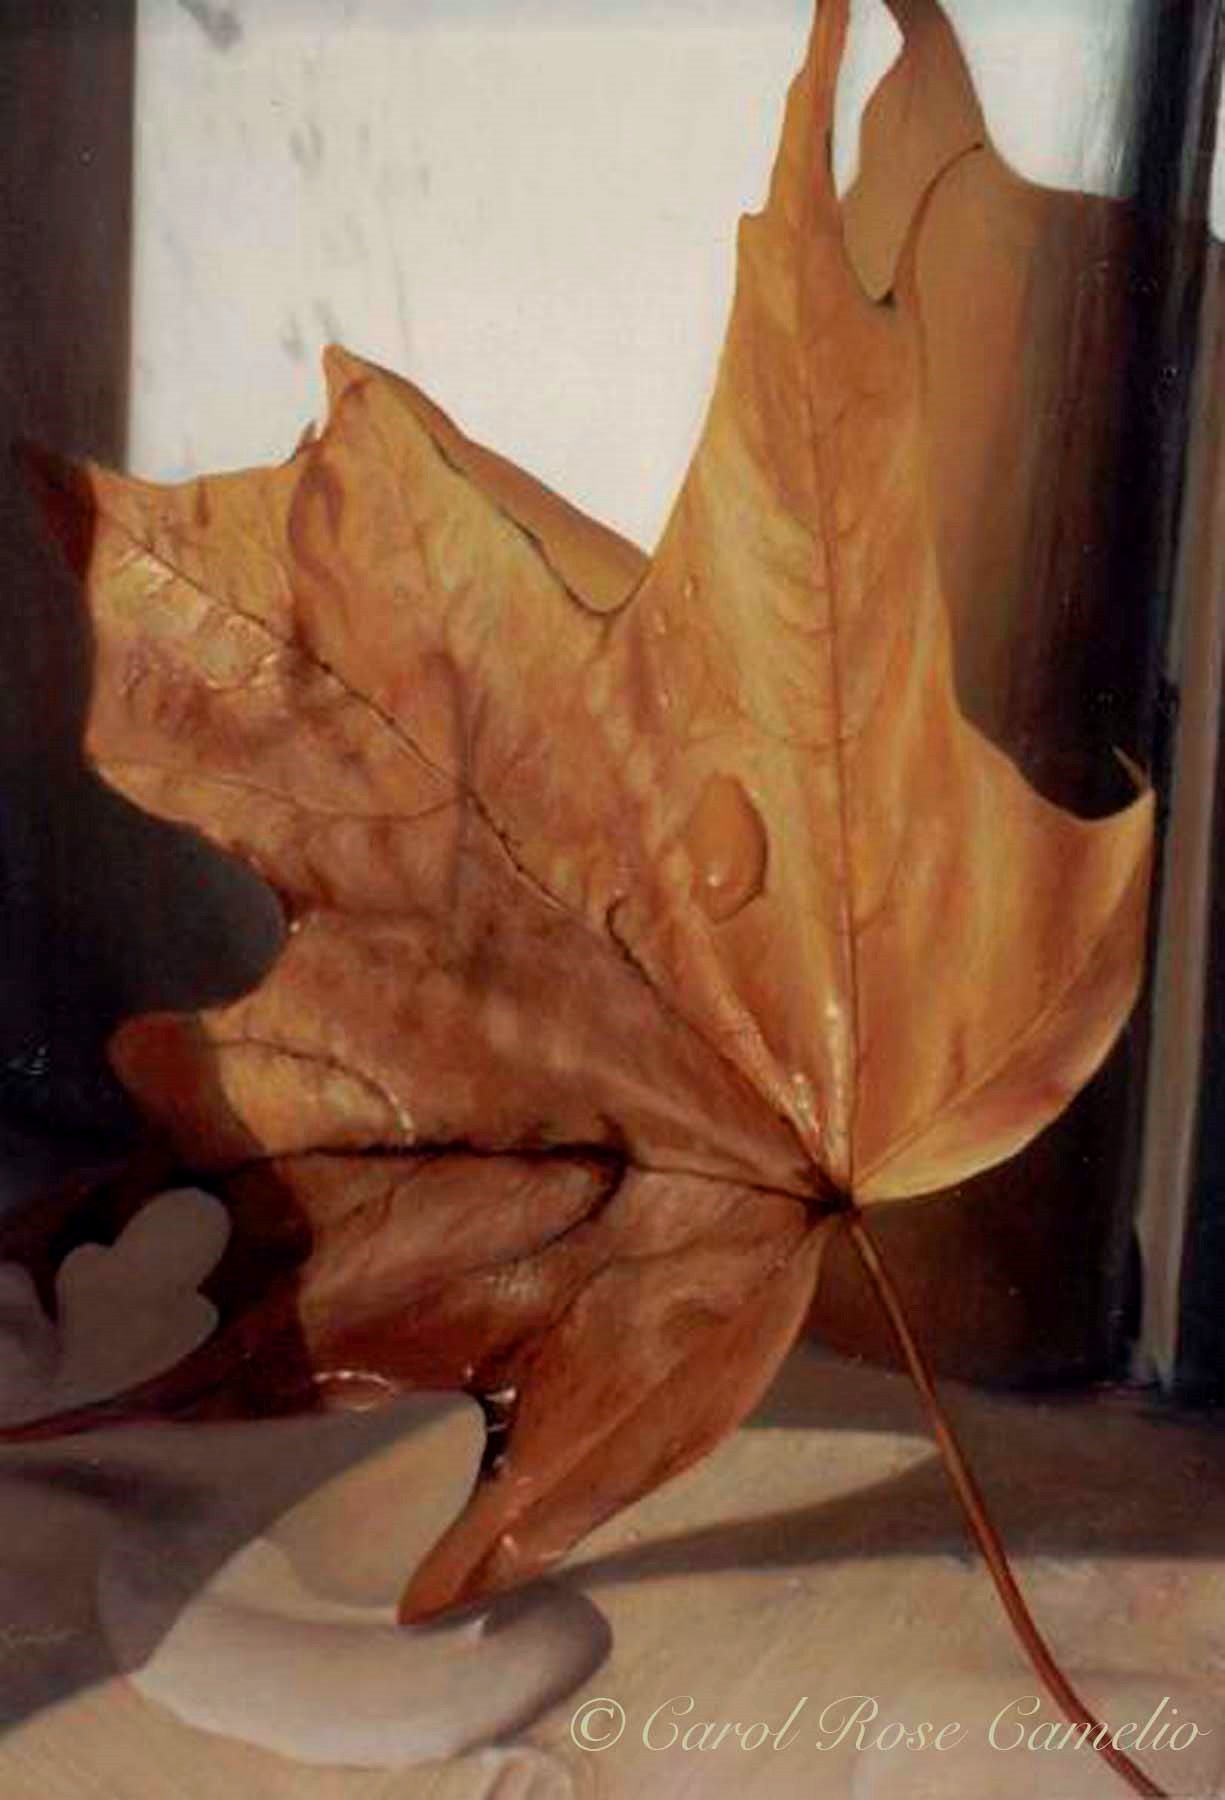 Transformation: A closeup of a fallen, dewy, orange-colored maple leaf resting against a windowsill.